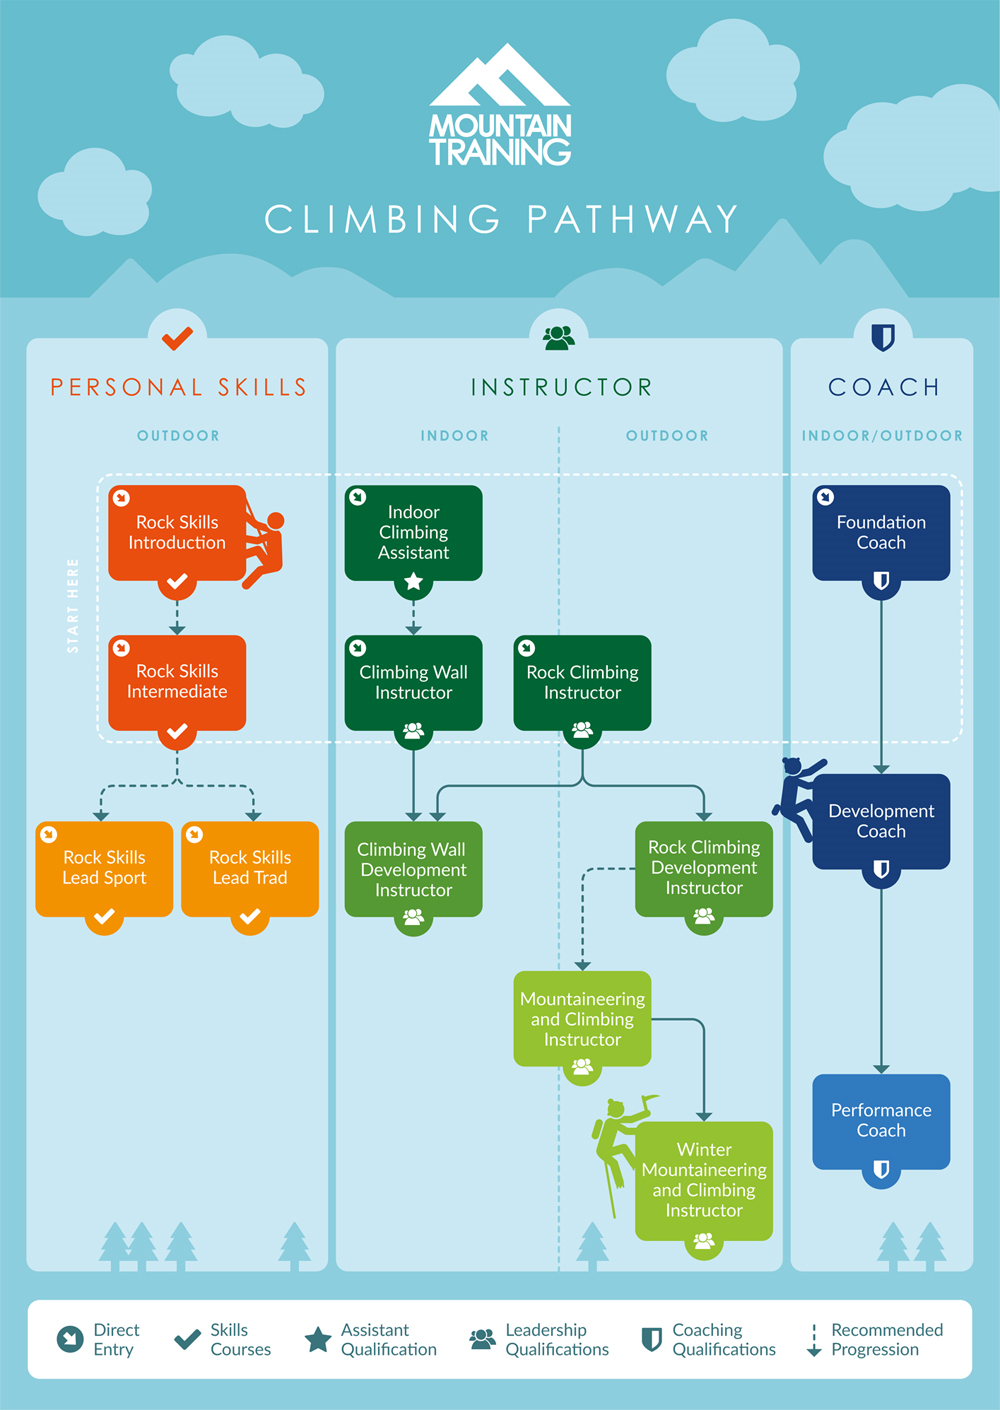 Climbing Pathway Infographic